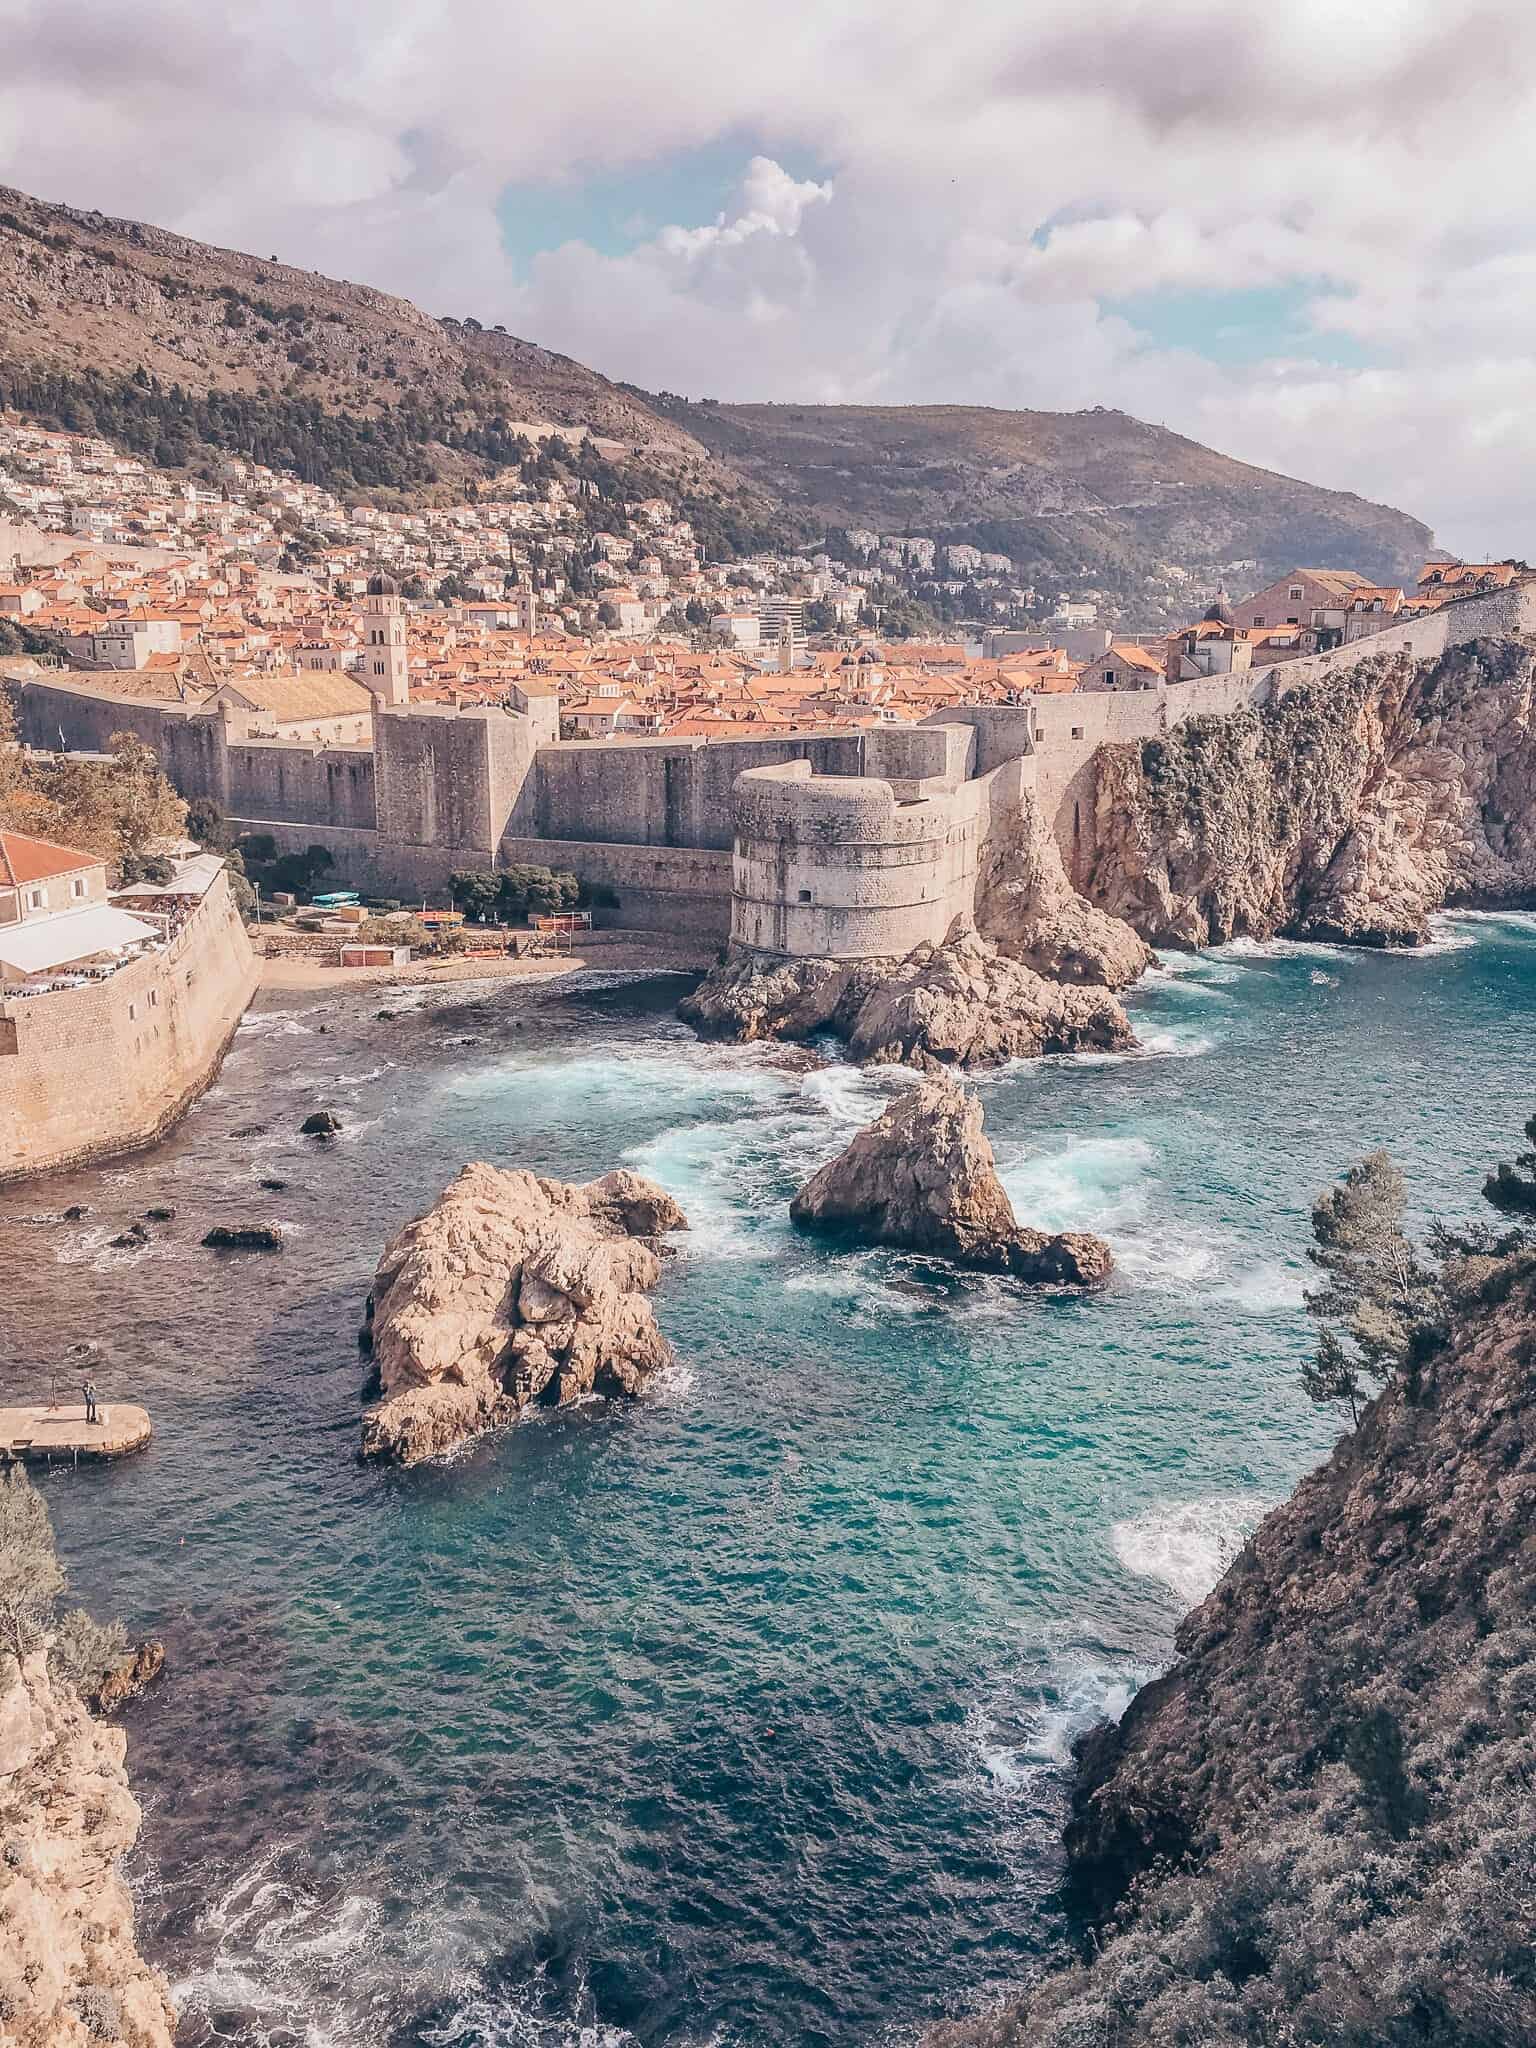 Is Dubrovnik Worth Visiting?